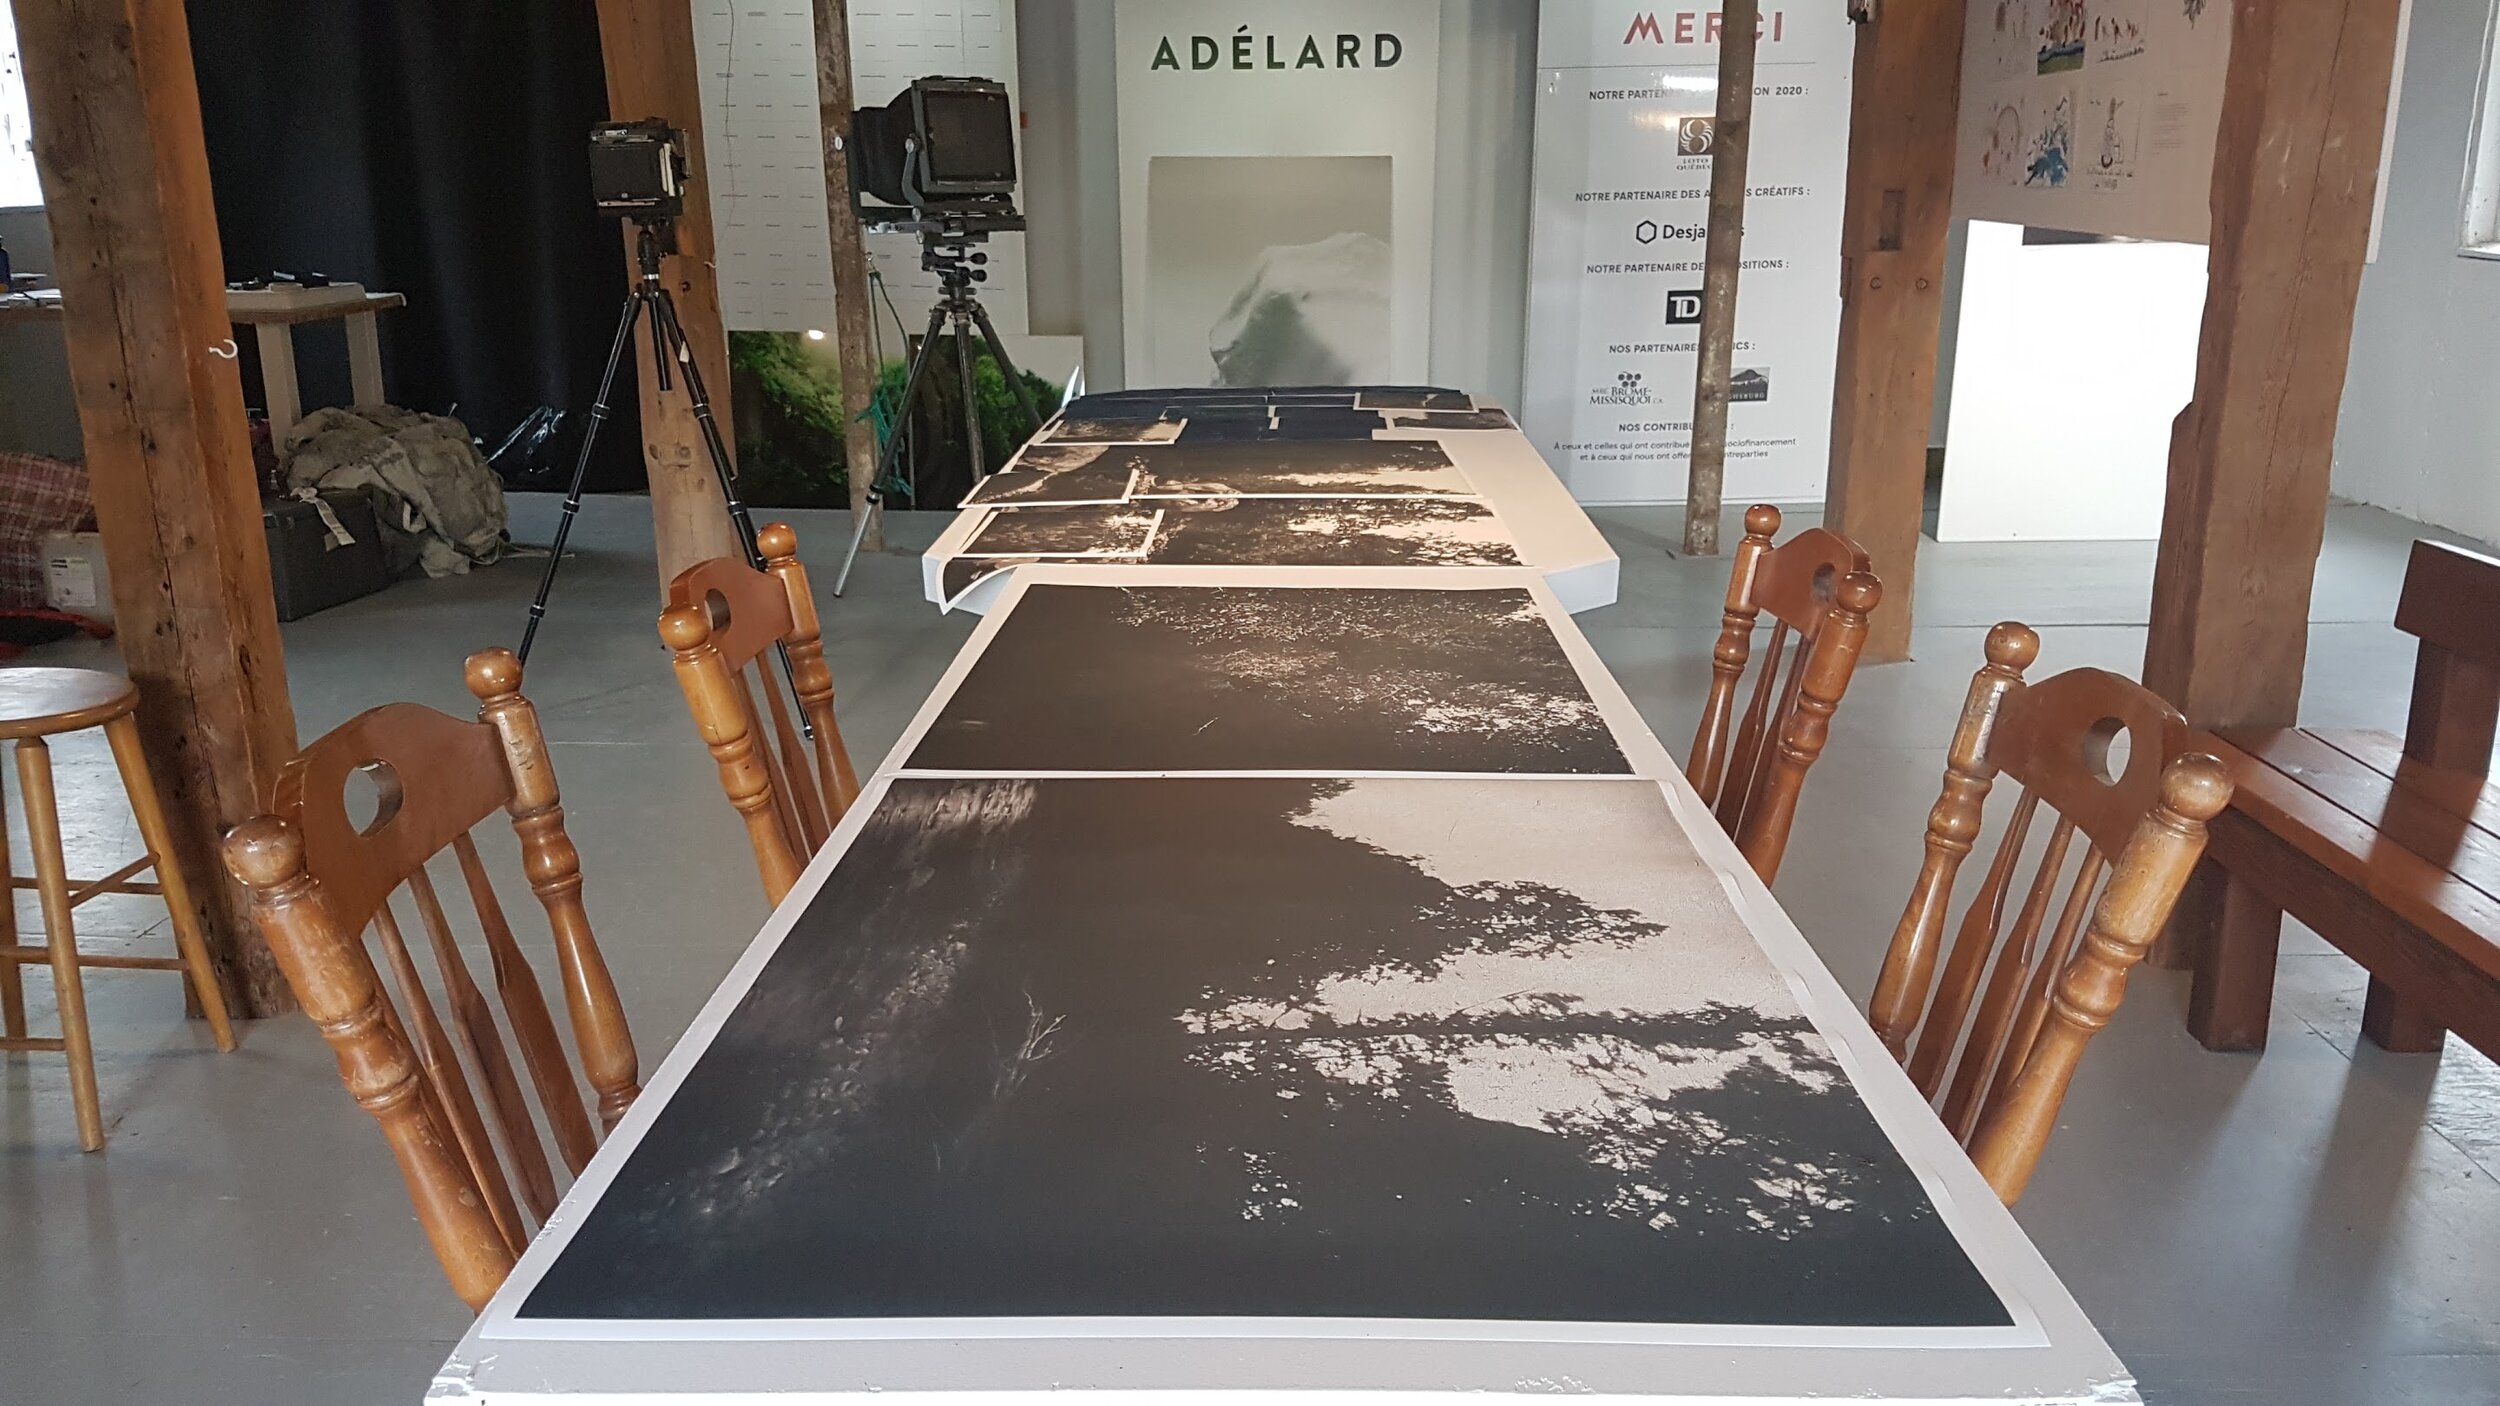 Adelard-travail-Alain-table-milieu-ete2020.jpg